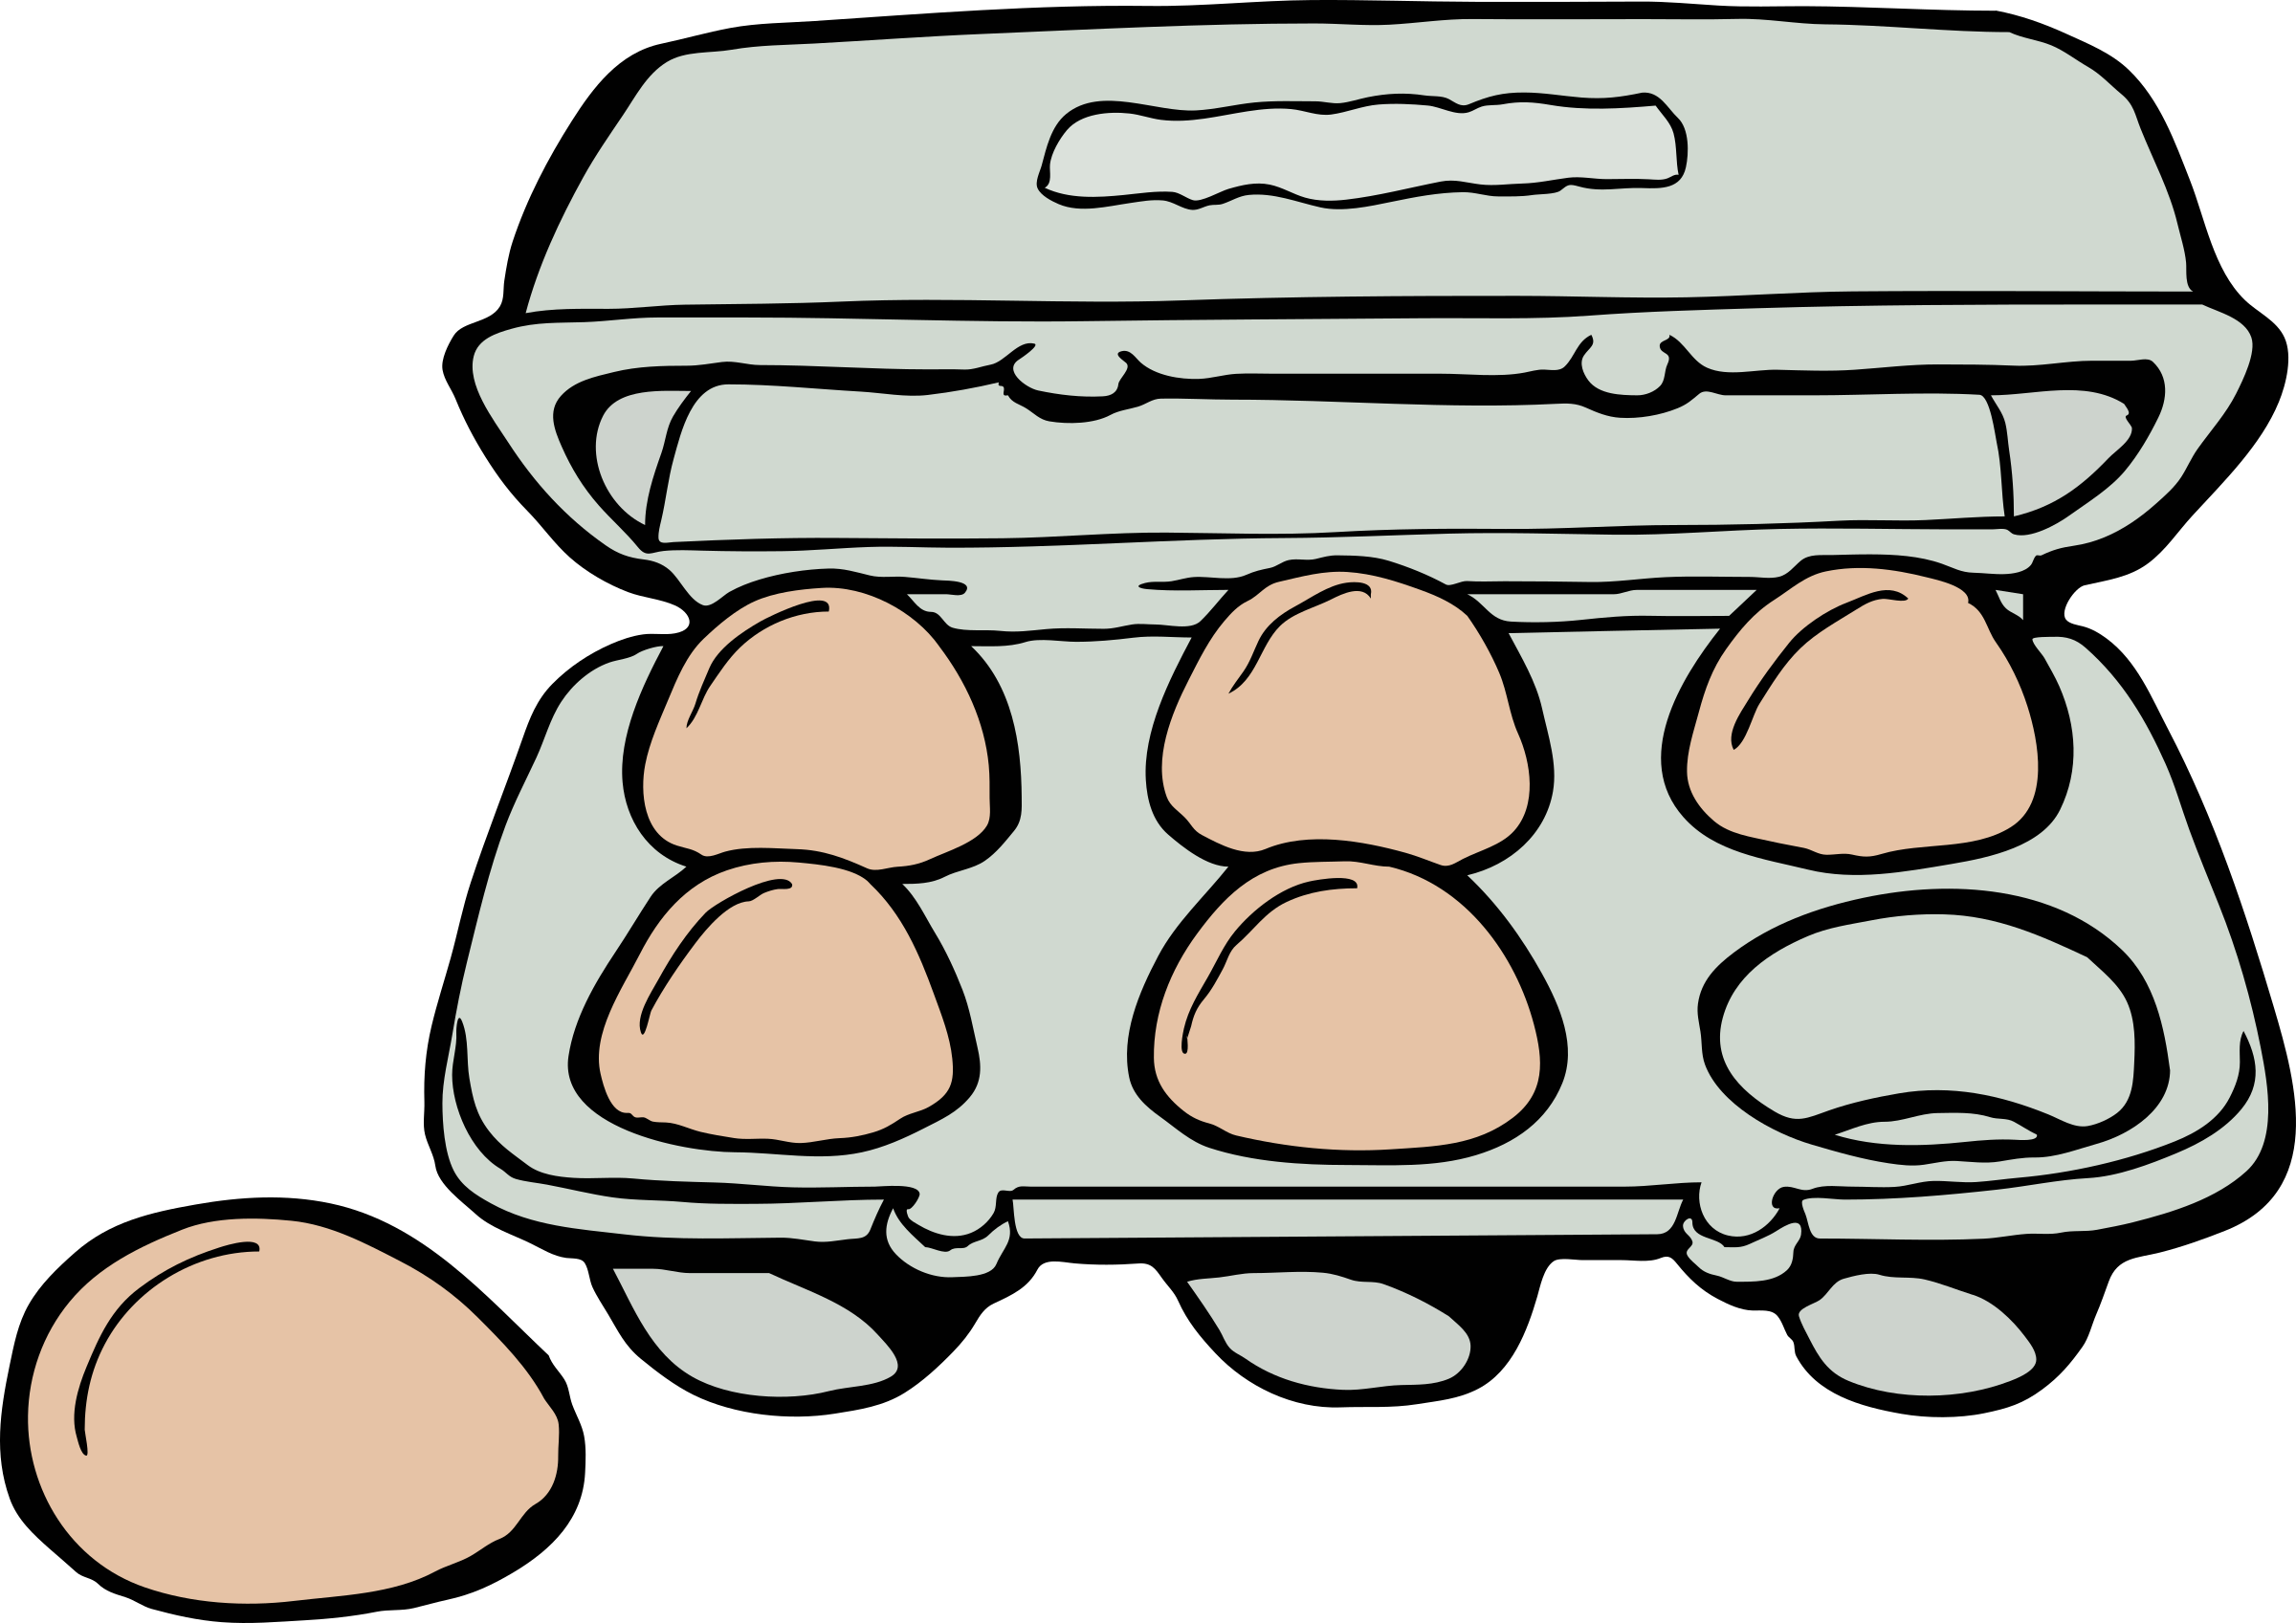 Fried Egg Egg Carton Clip Art - Fried Egg Egg Carton Clip Art (2400x1697)